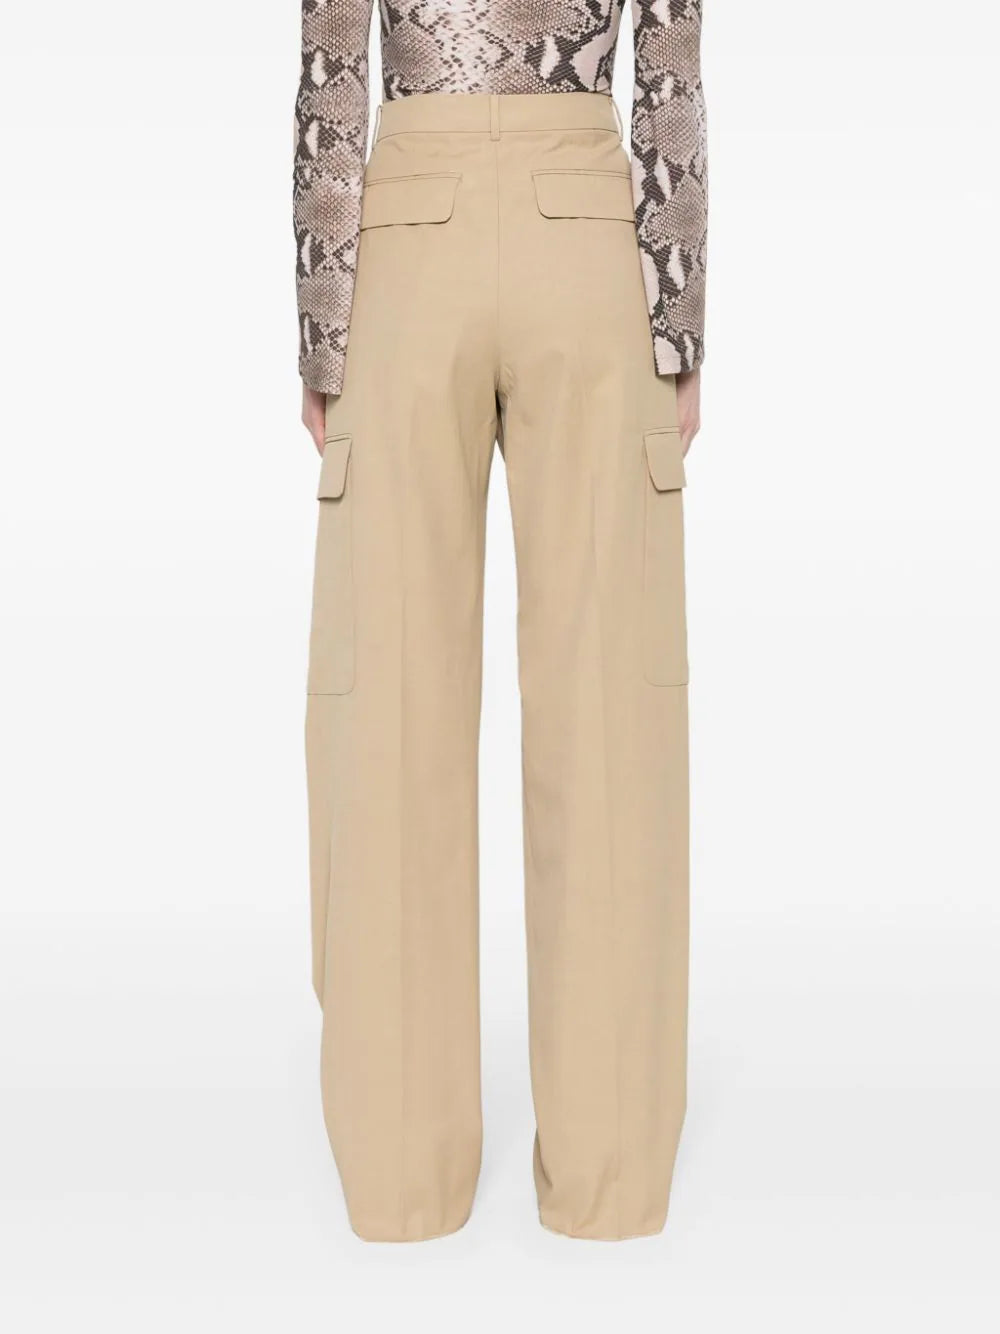 Jacopo straight-leg high-rise woven-blend trousers, Khaki